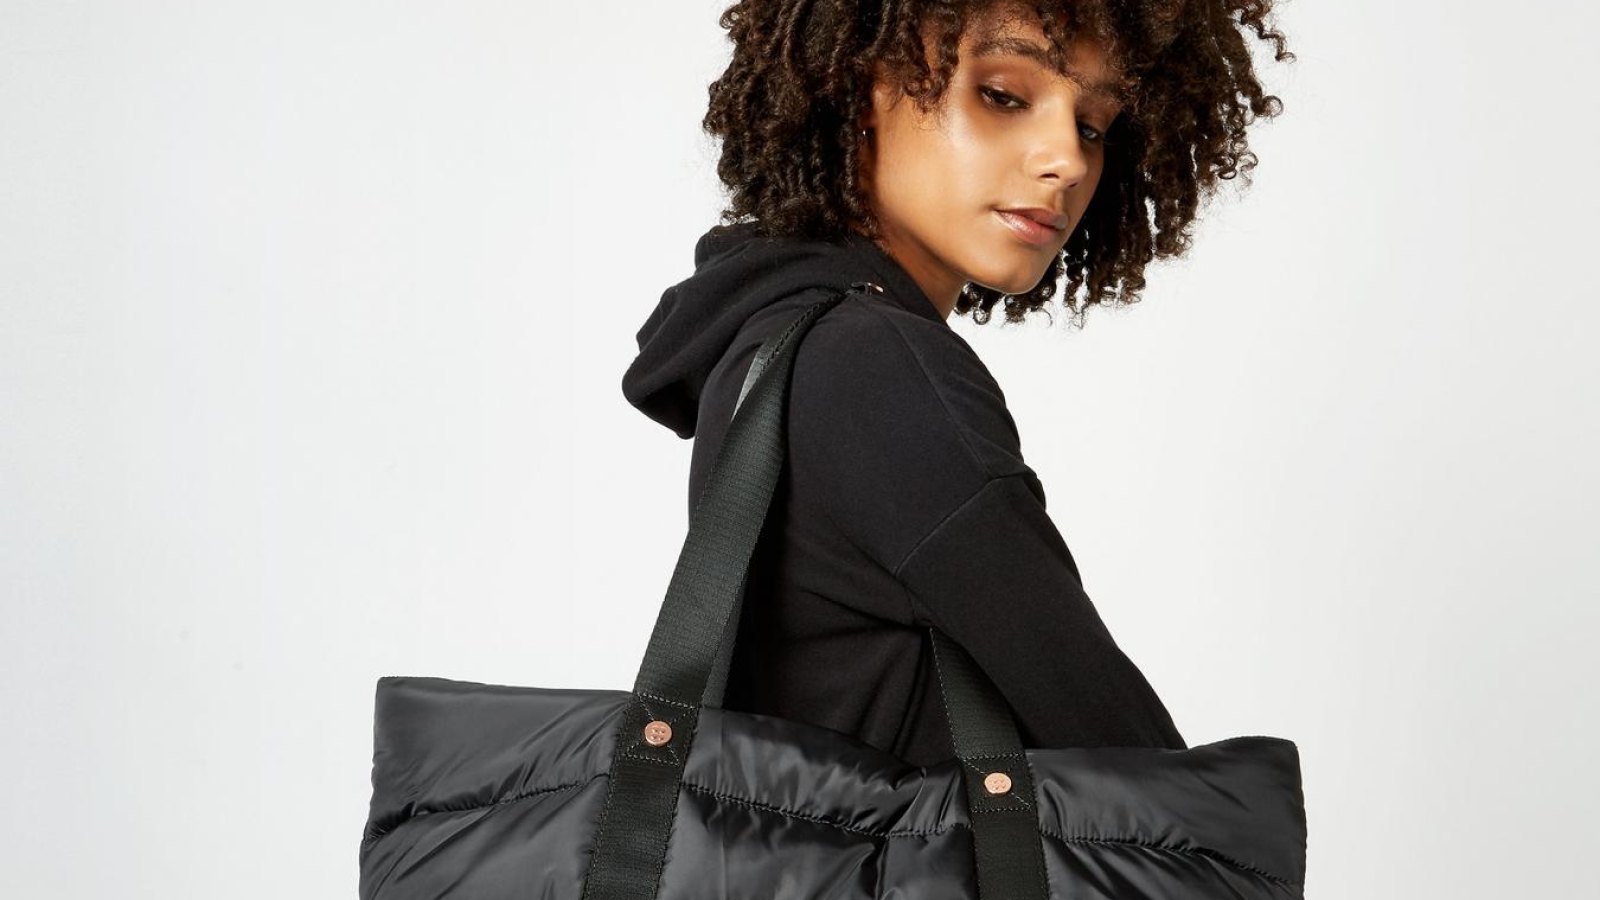 Sweaty Betty womens Icon Workout bag, Black, One Size US, Black